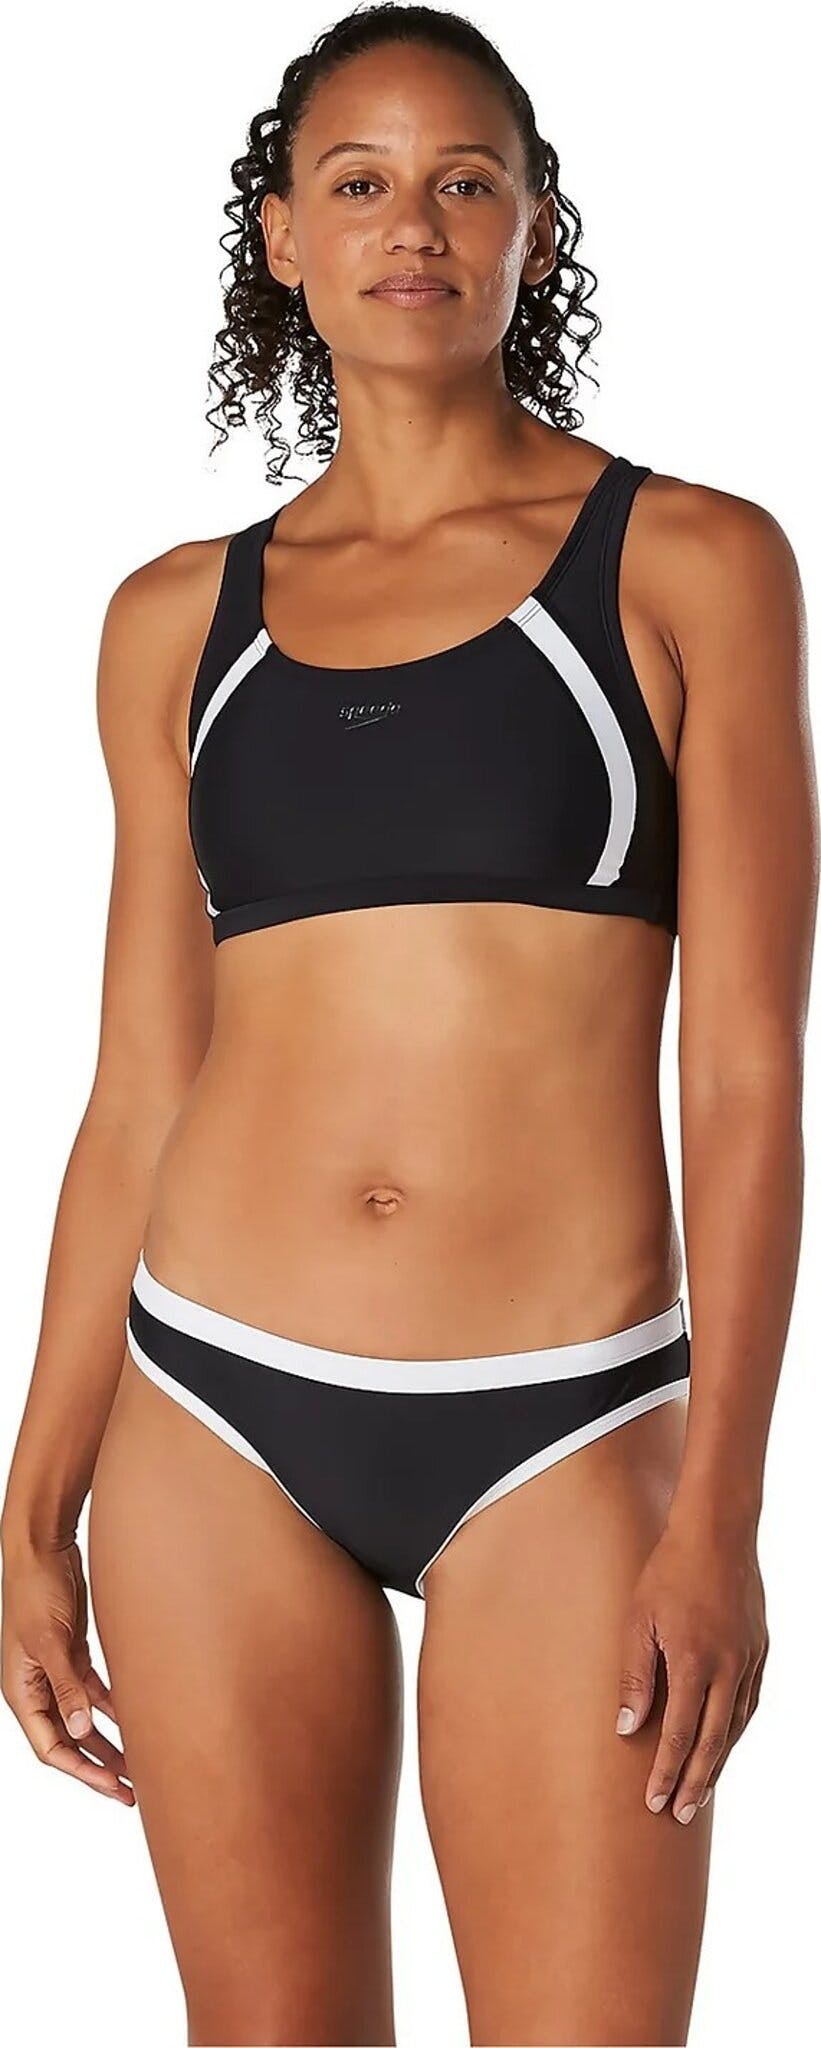 Product image for Hipster Bikini Bottom with Binding - Women's